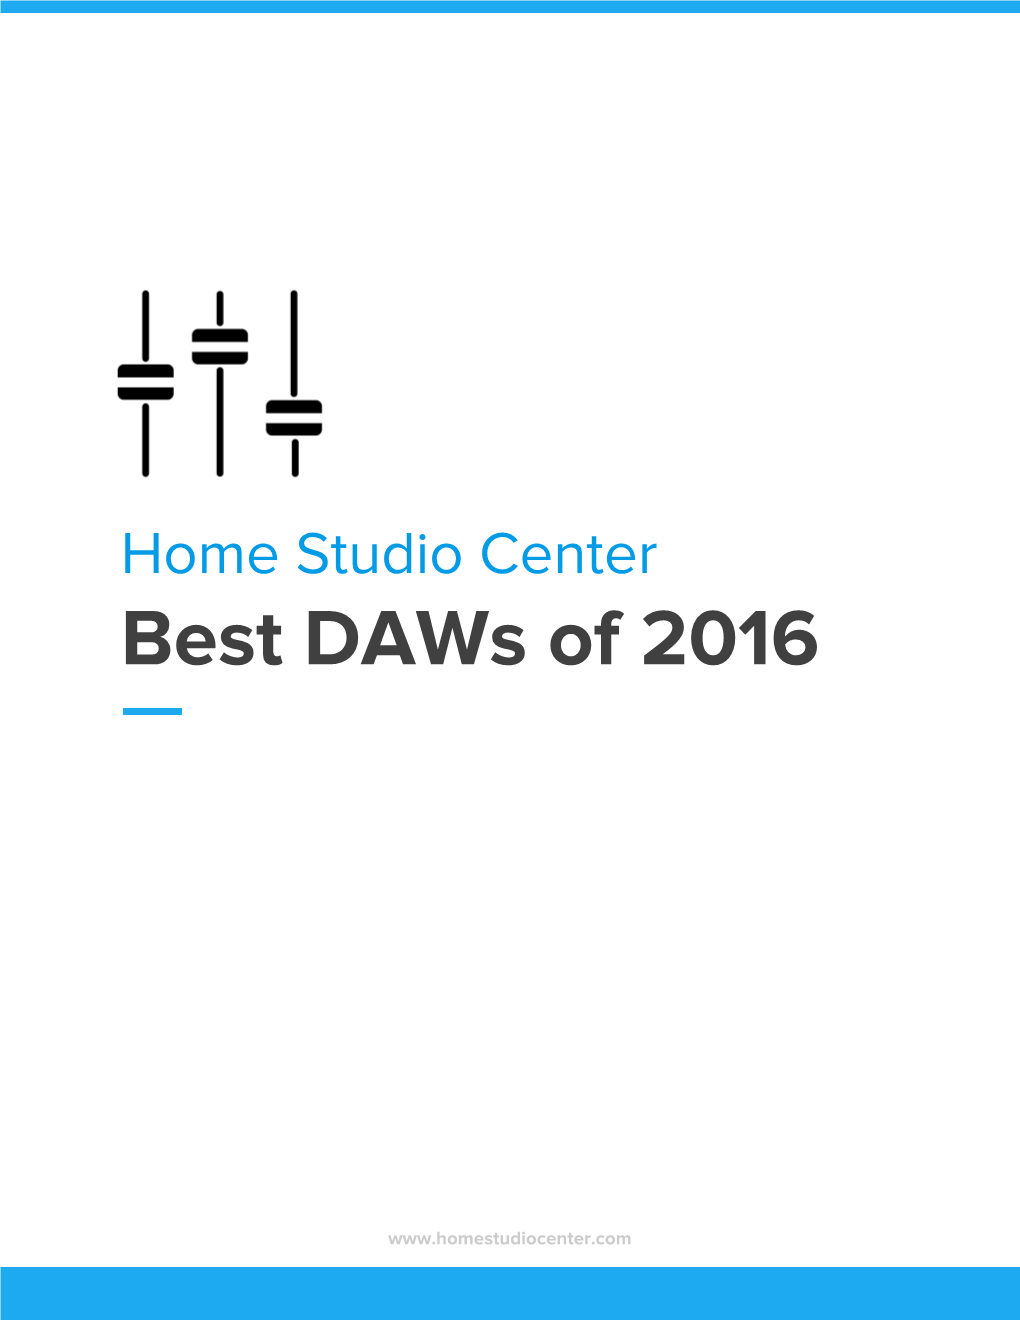 Home Studio Center Best Daws of 2016